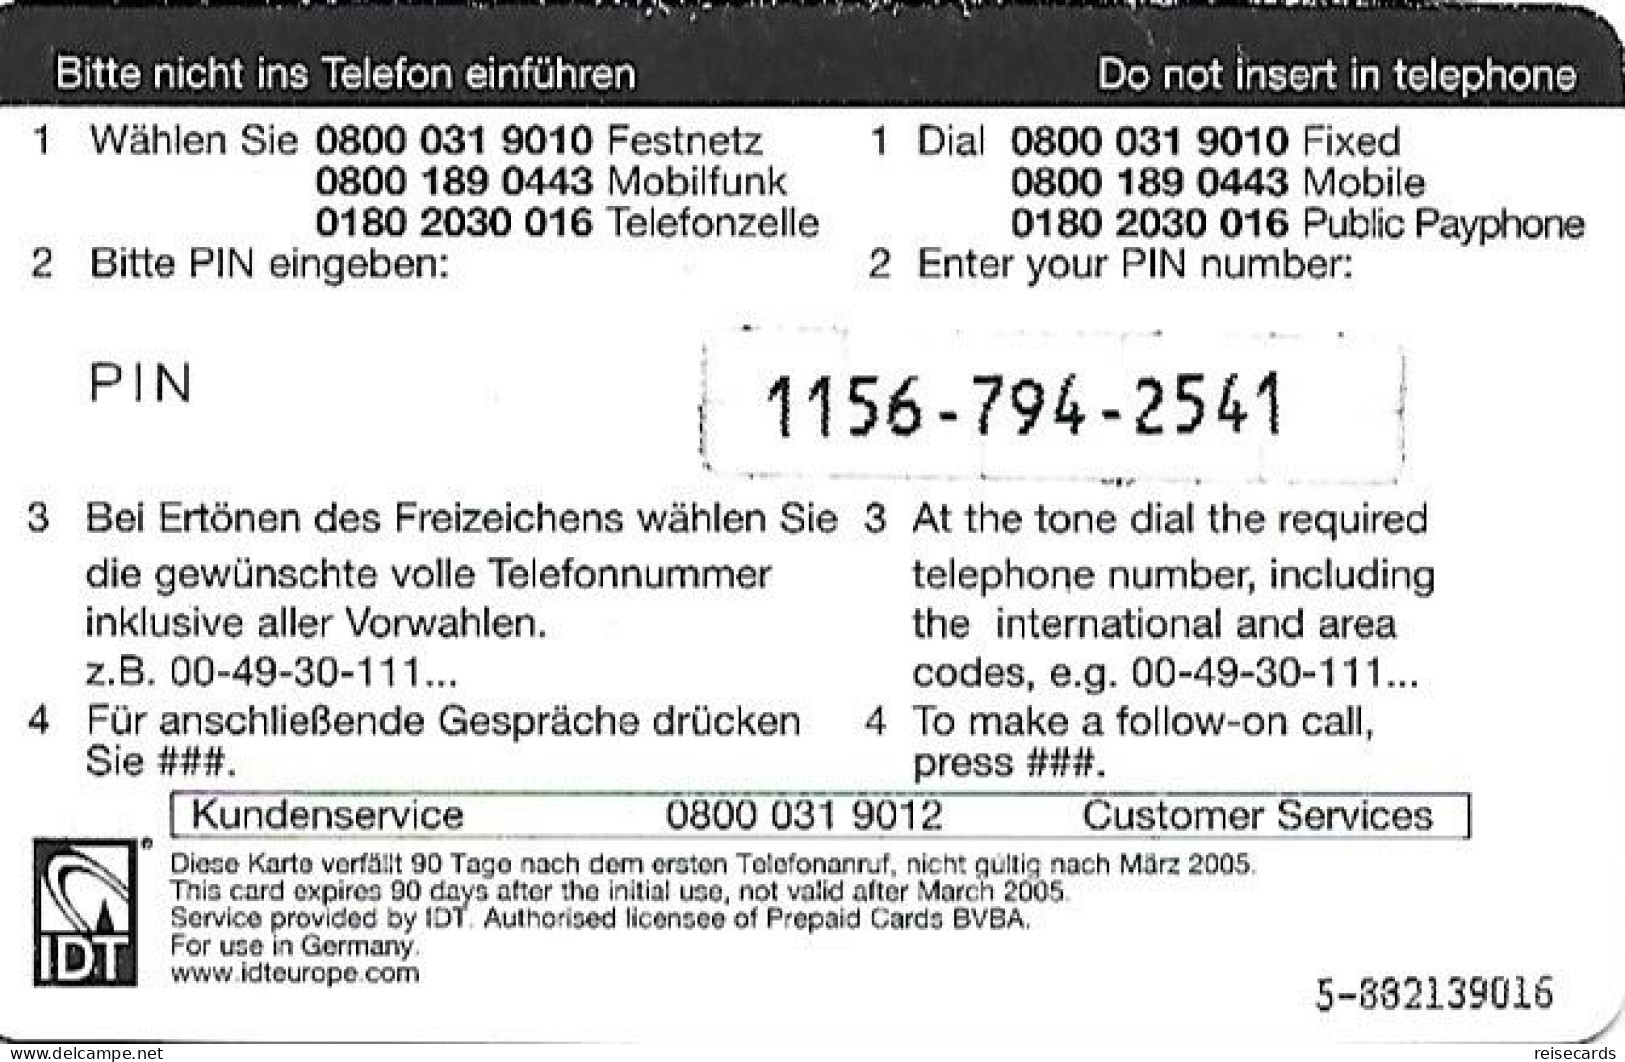 Germany: Prepaid IDT Afrika Karte 03.05 - Cellulari, Carte Prepagate E Ricariche